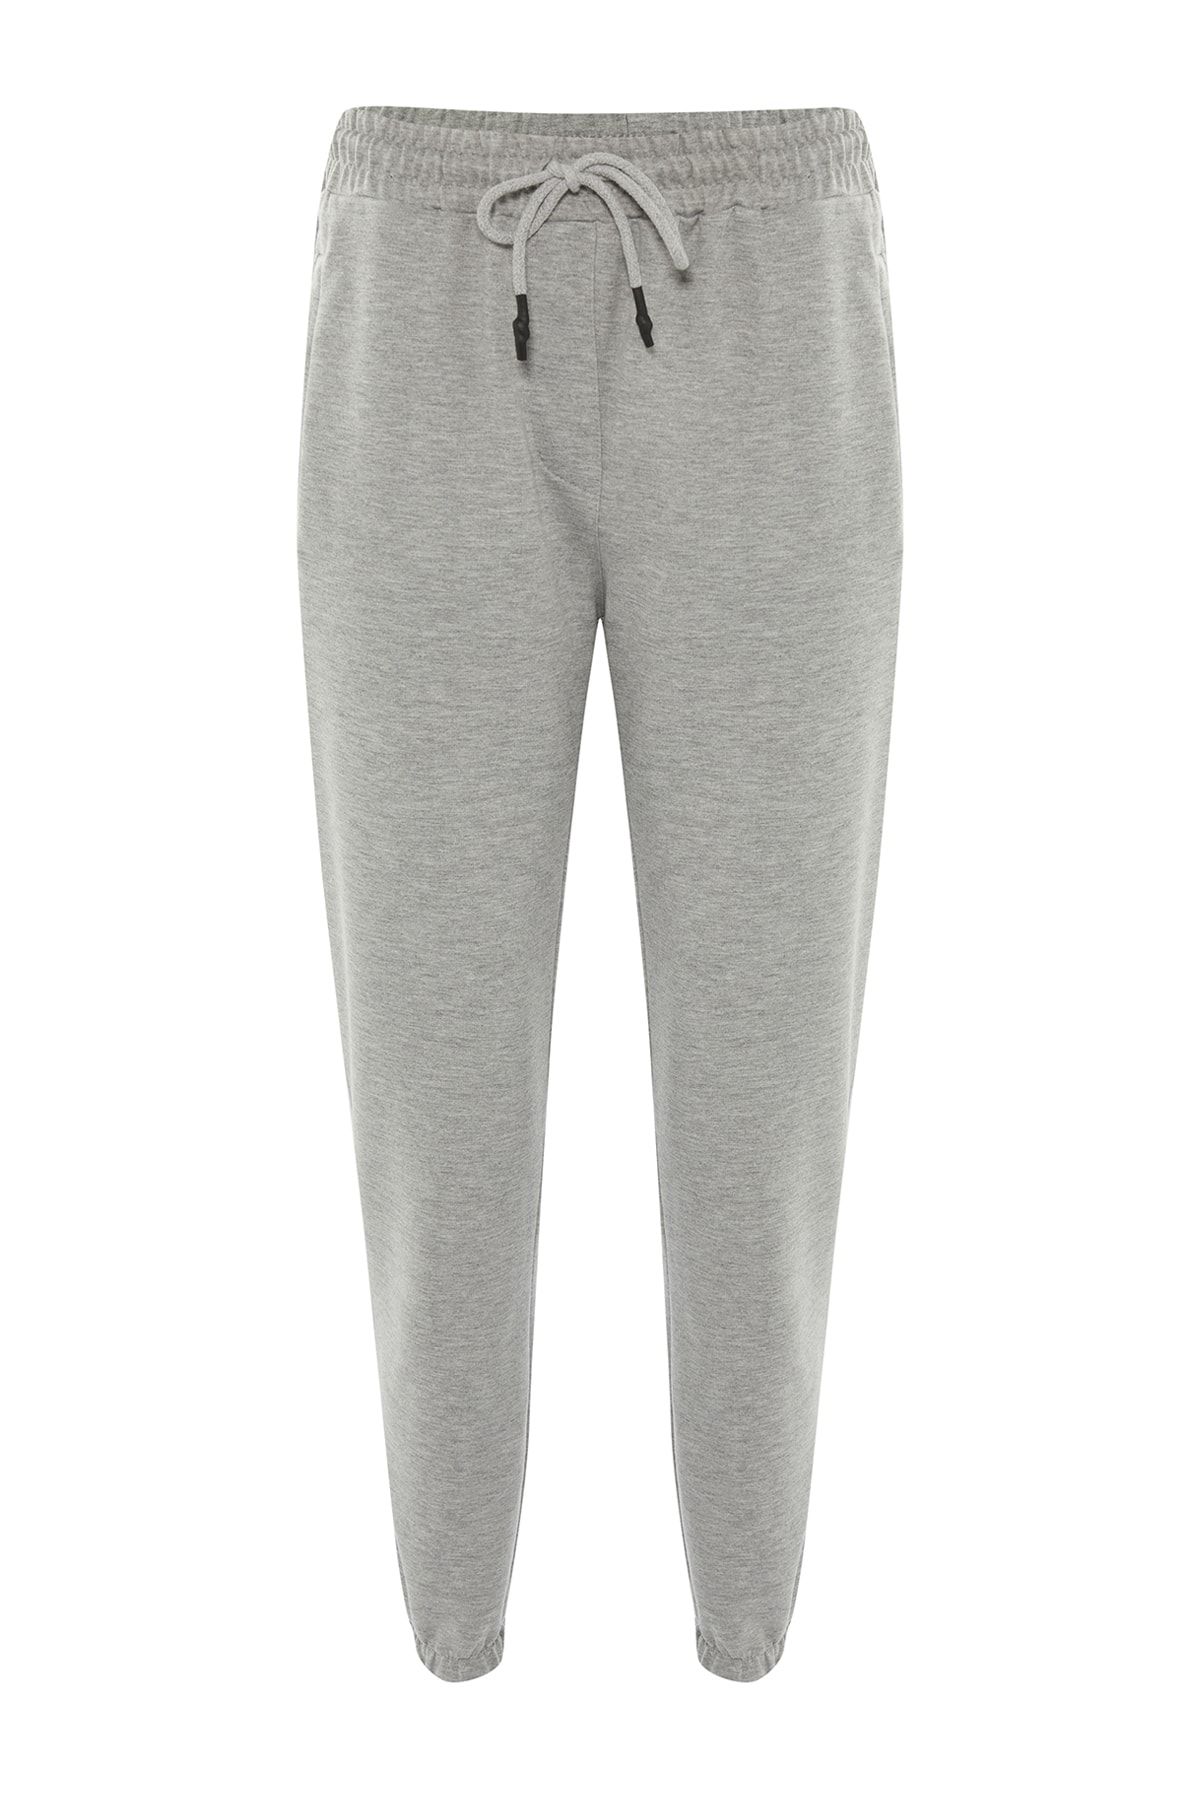 Trendyol Collection Gray Men's Regular/Normal Cut Striped Elastic  Sweatpants TMNSS20EA0050 - Trendyol